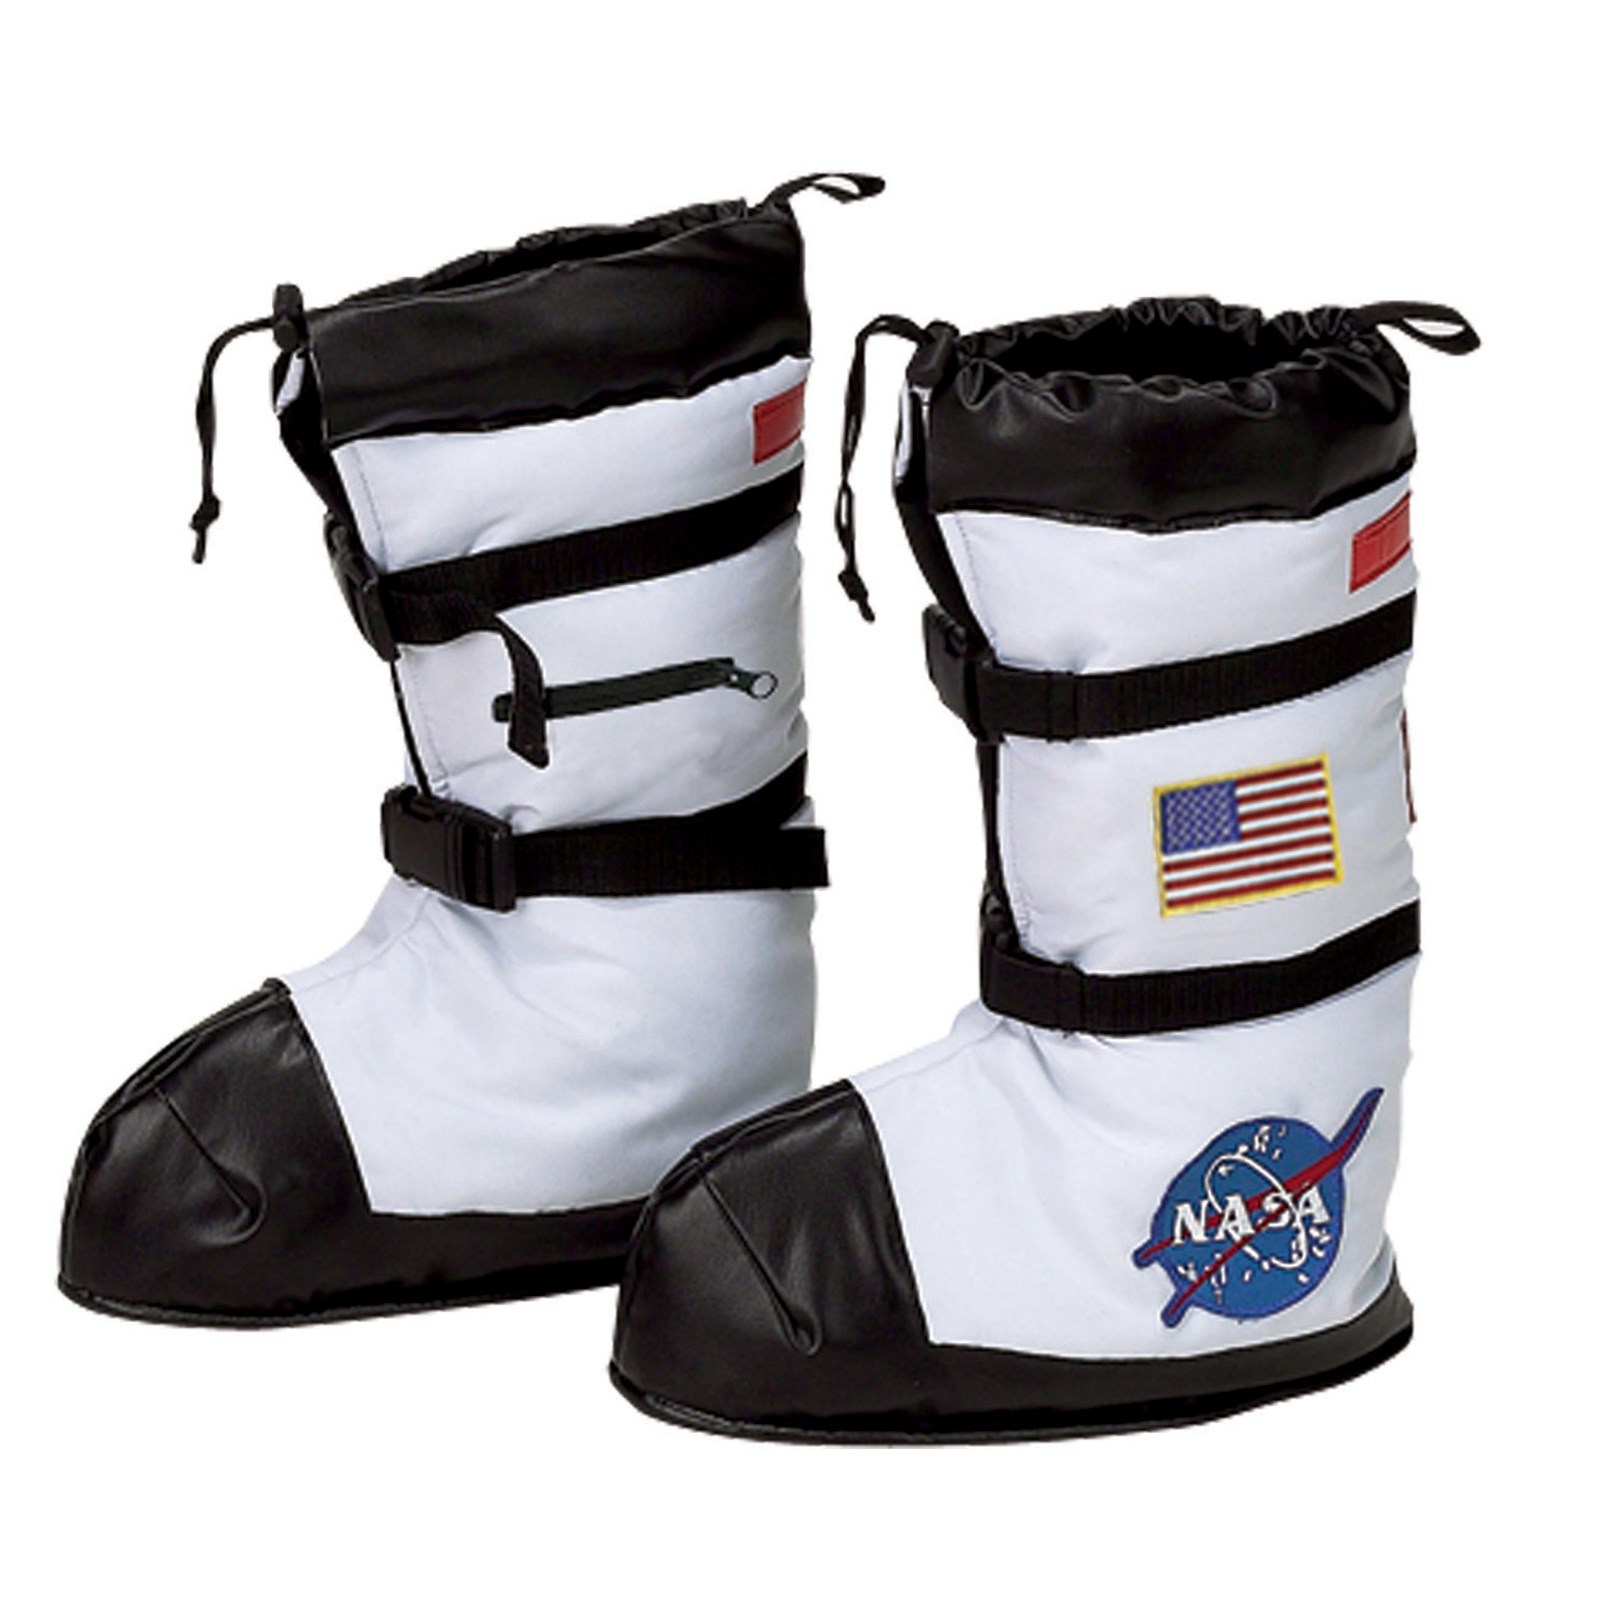 NASA Astronaut Child Boot Covers